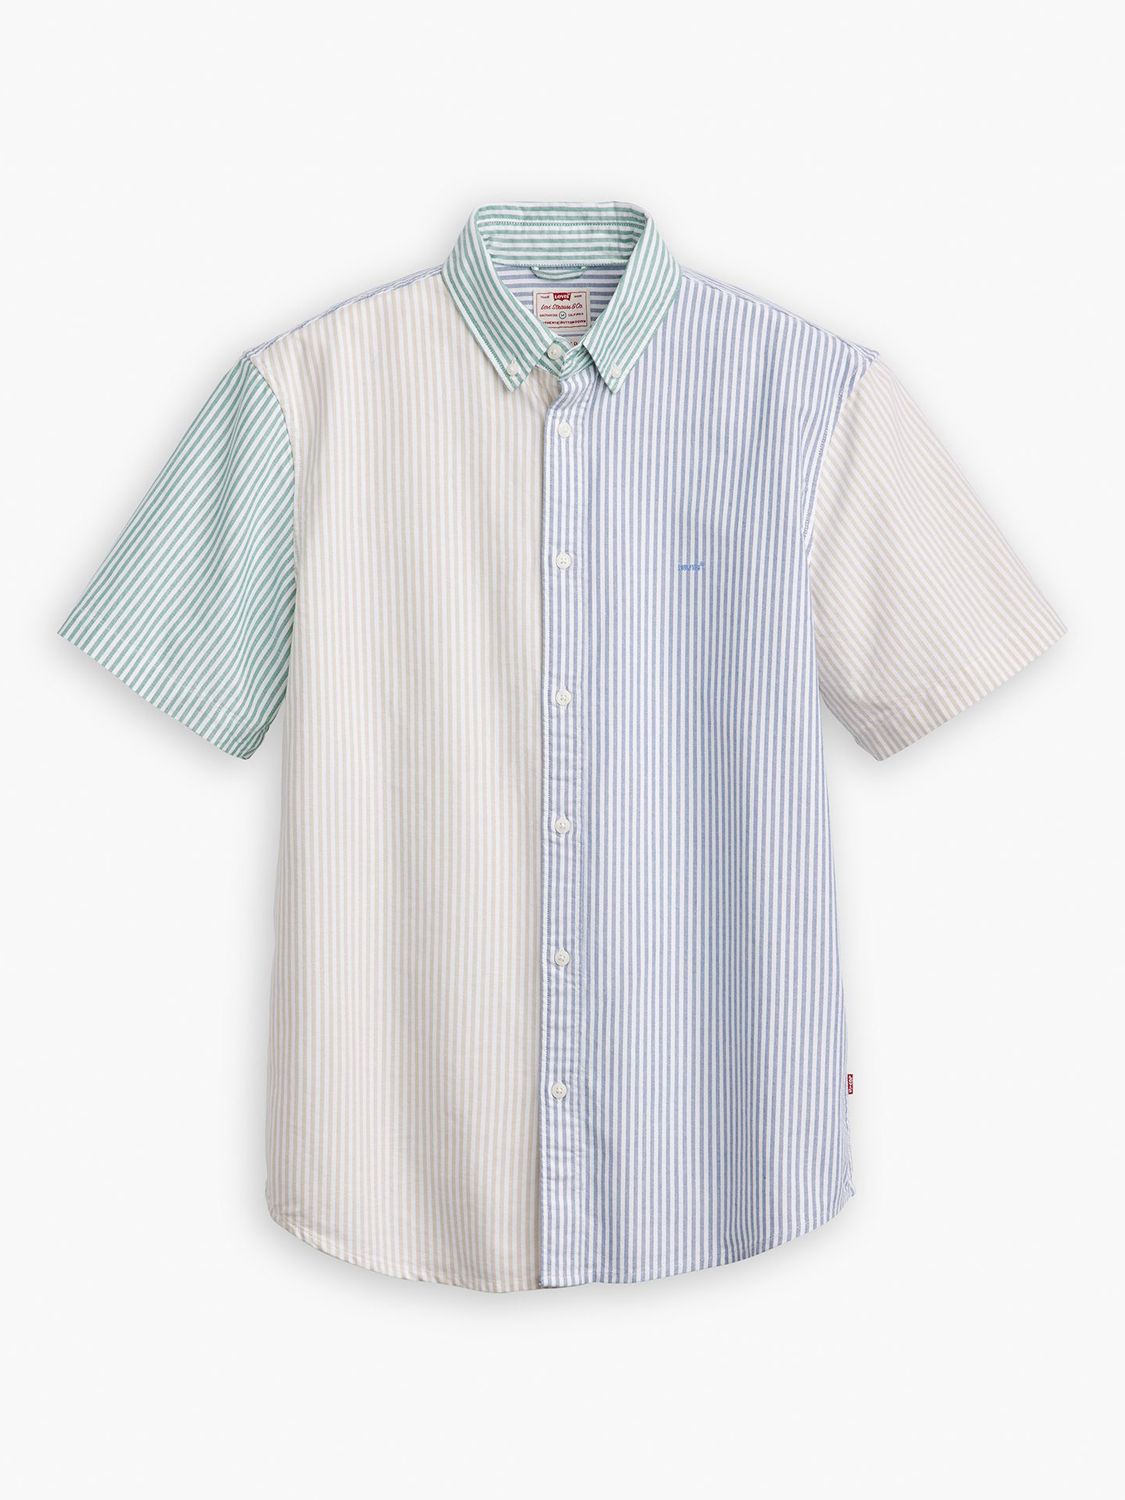 Levi's Authentic Stripe Button Down Short Sleeve Shirt, White/Multi, S